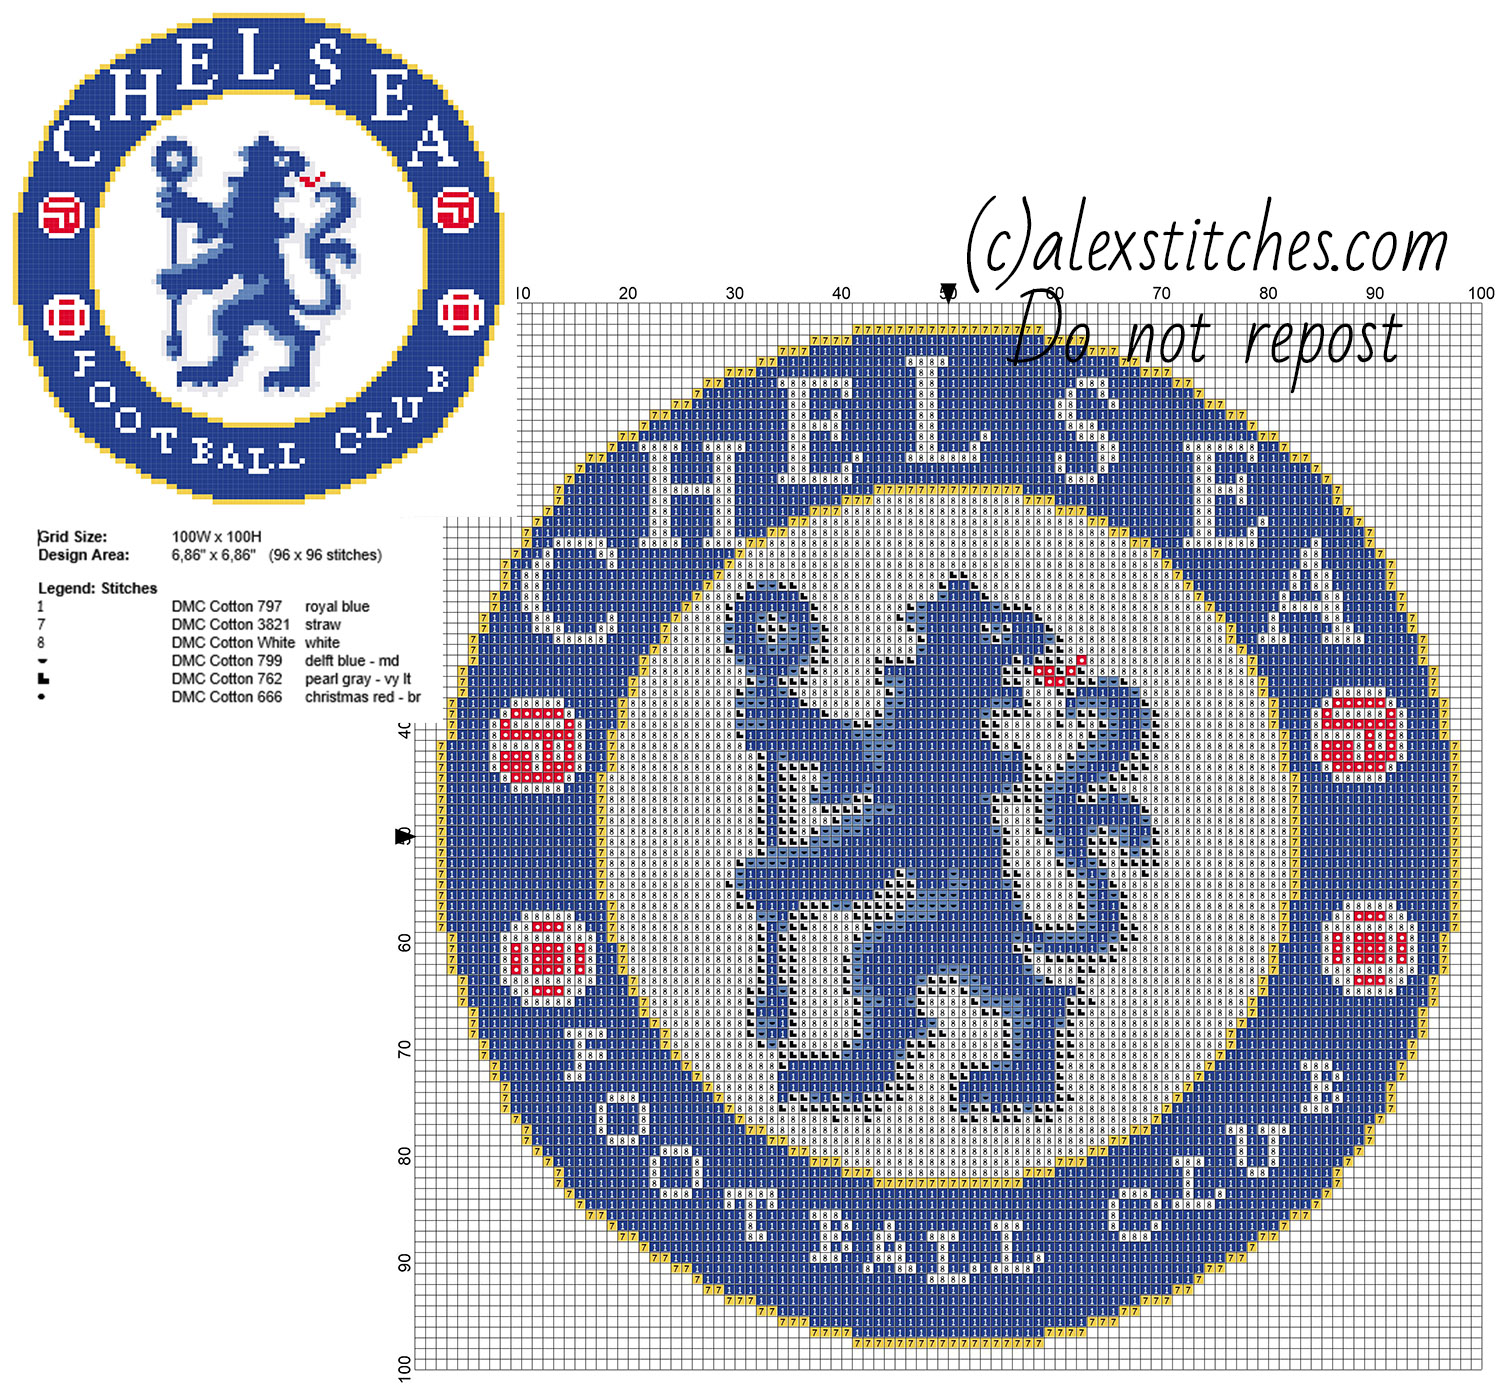 Chelsea F_C_ soccer team badge logo free cross stitch pattern 96 x 96 stitches 6 DMC threads